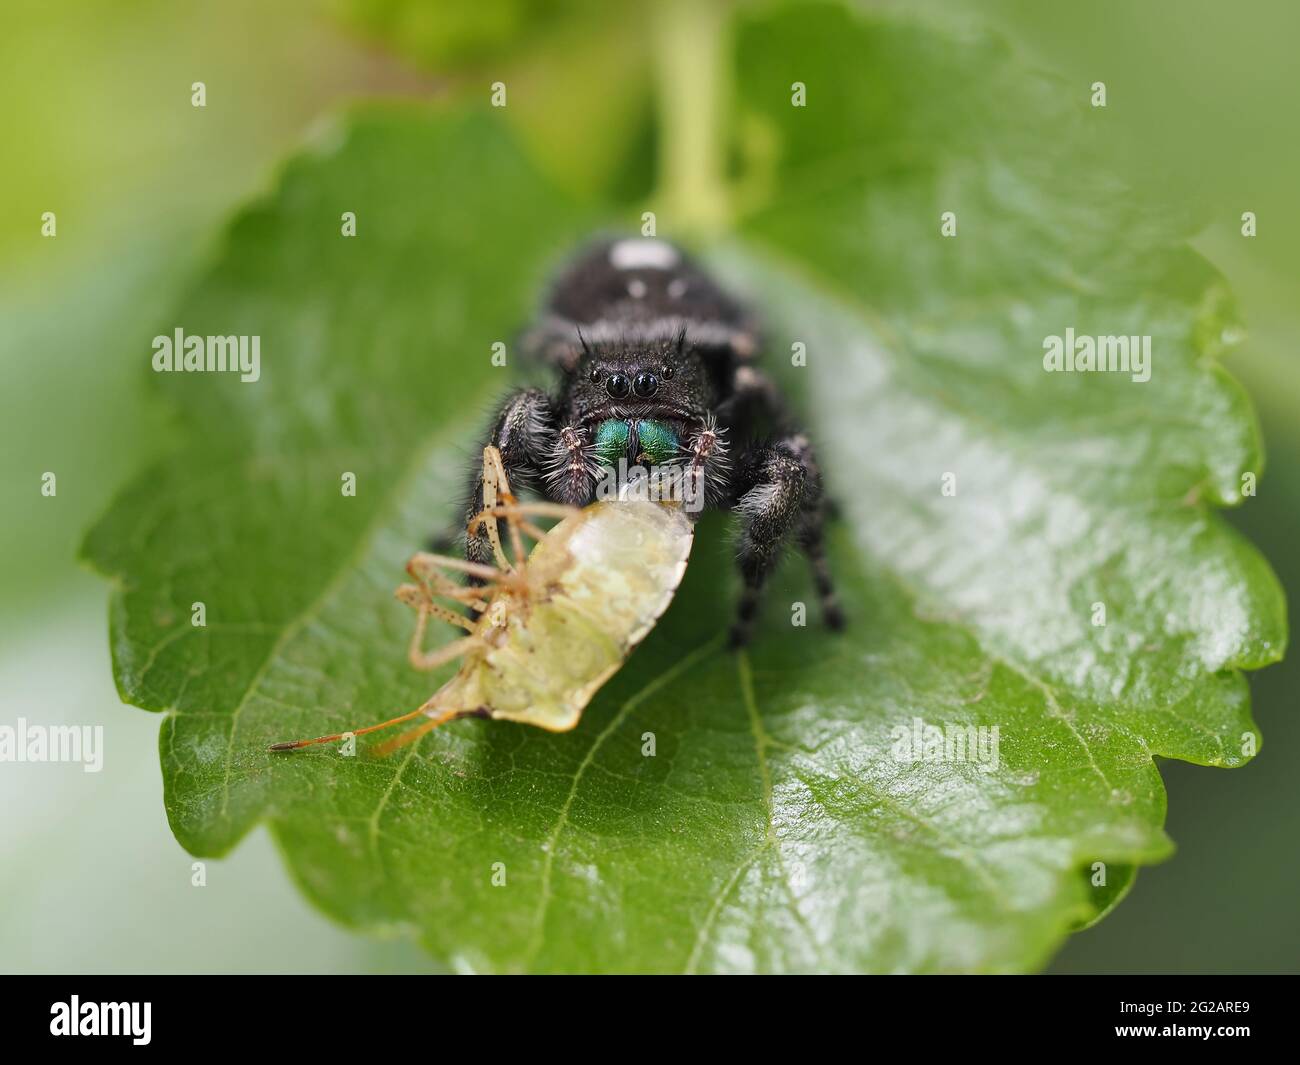 Phidippus audax (bold jumping spider) with prey (stinkbug) - macro photography Stock Photo